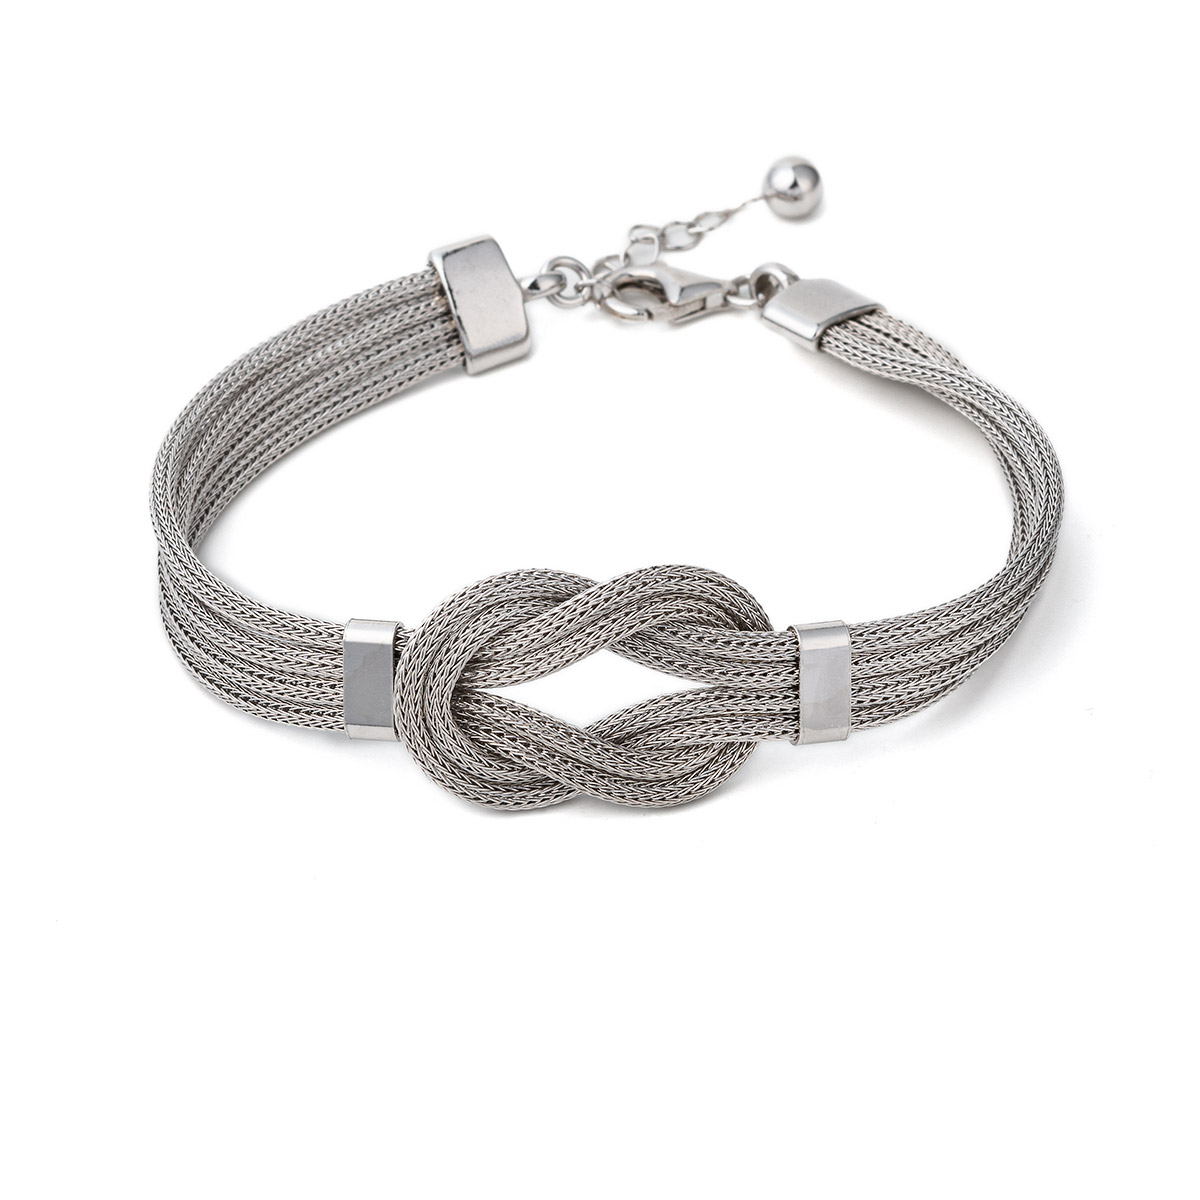 Knot Chain Bracelet - 925 Sterling Silver